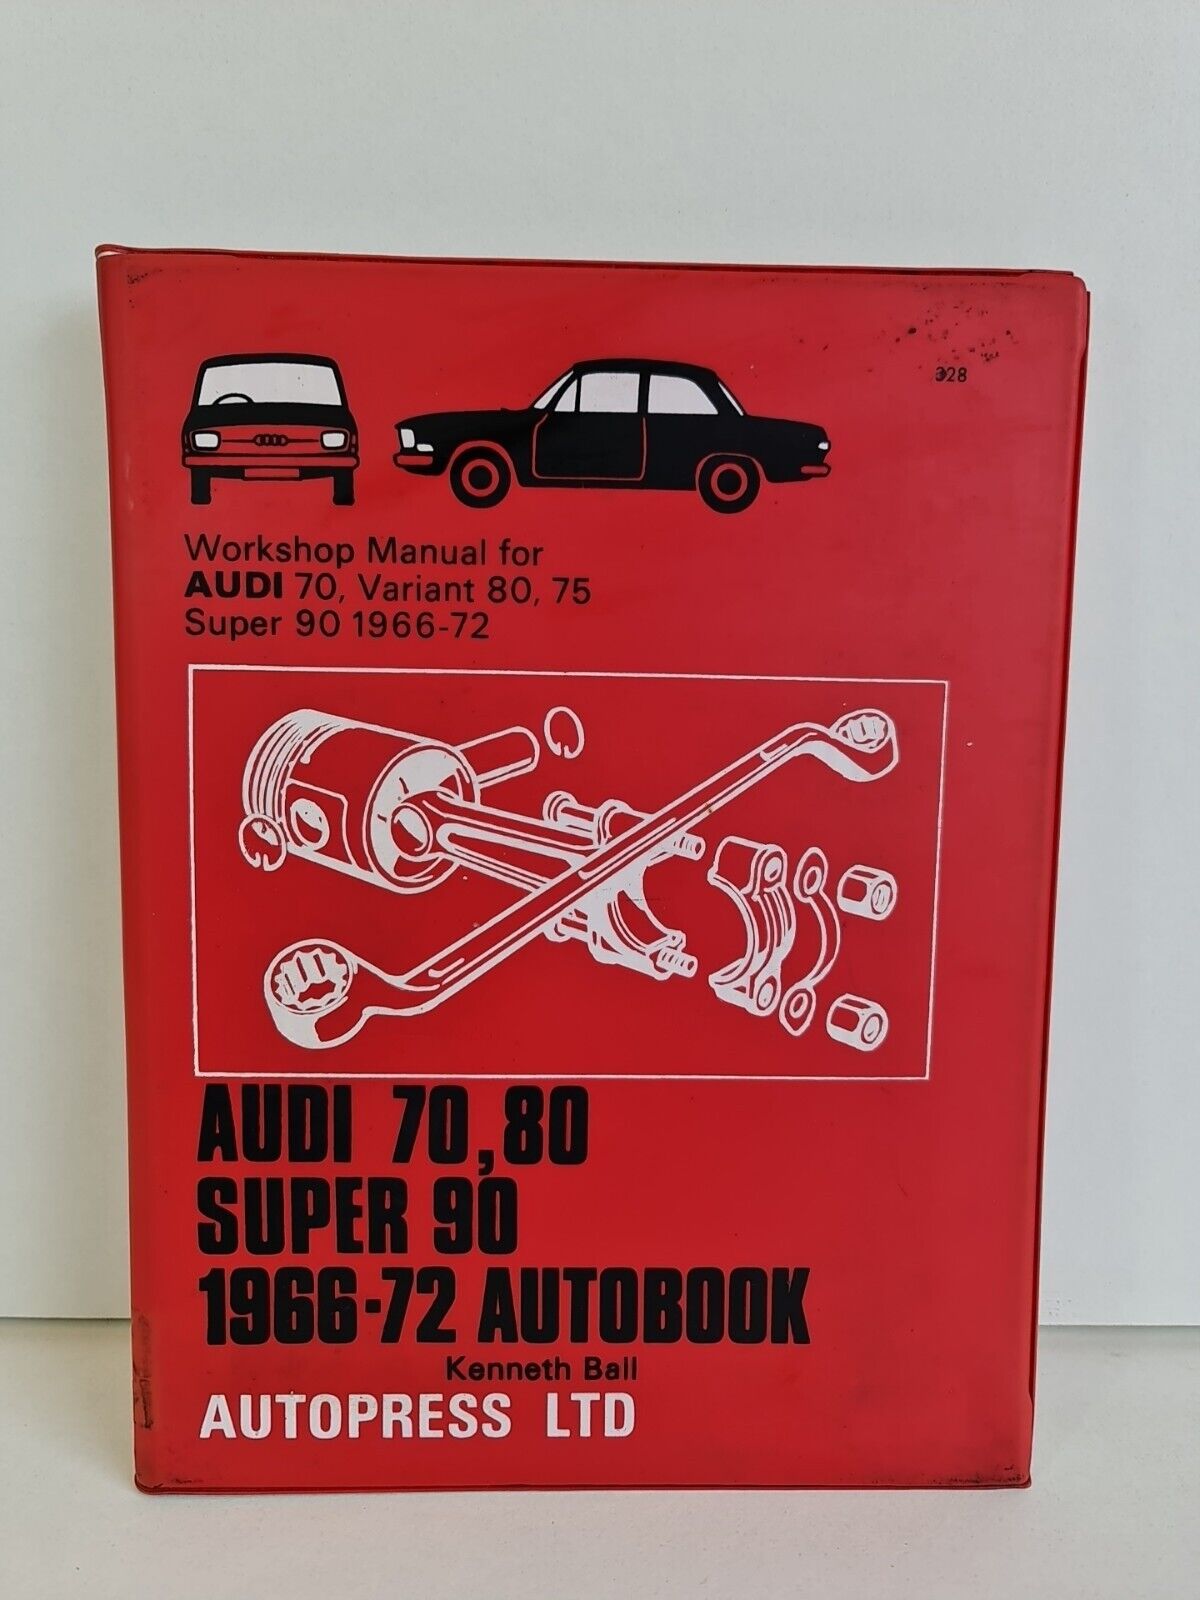 Audi 70, 80 Super 90 1966-72 Autobook (1973) - Workshop Manual